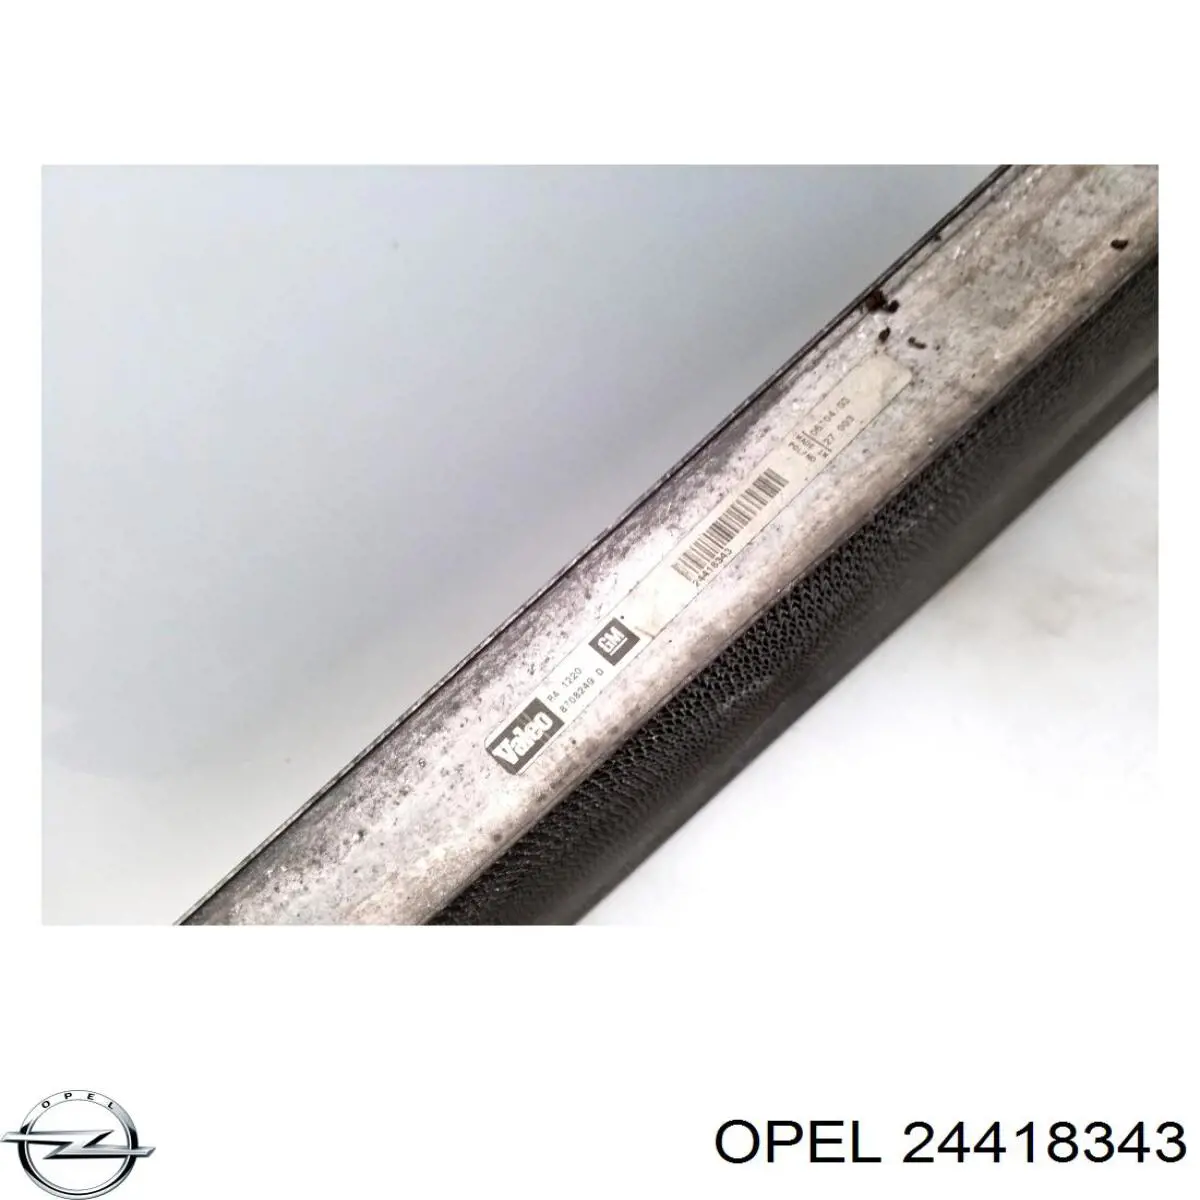 24418343 Opel radiador